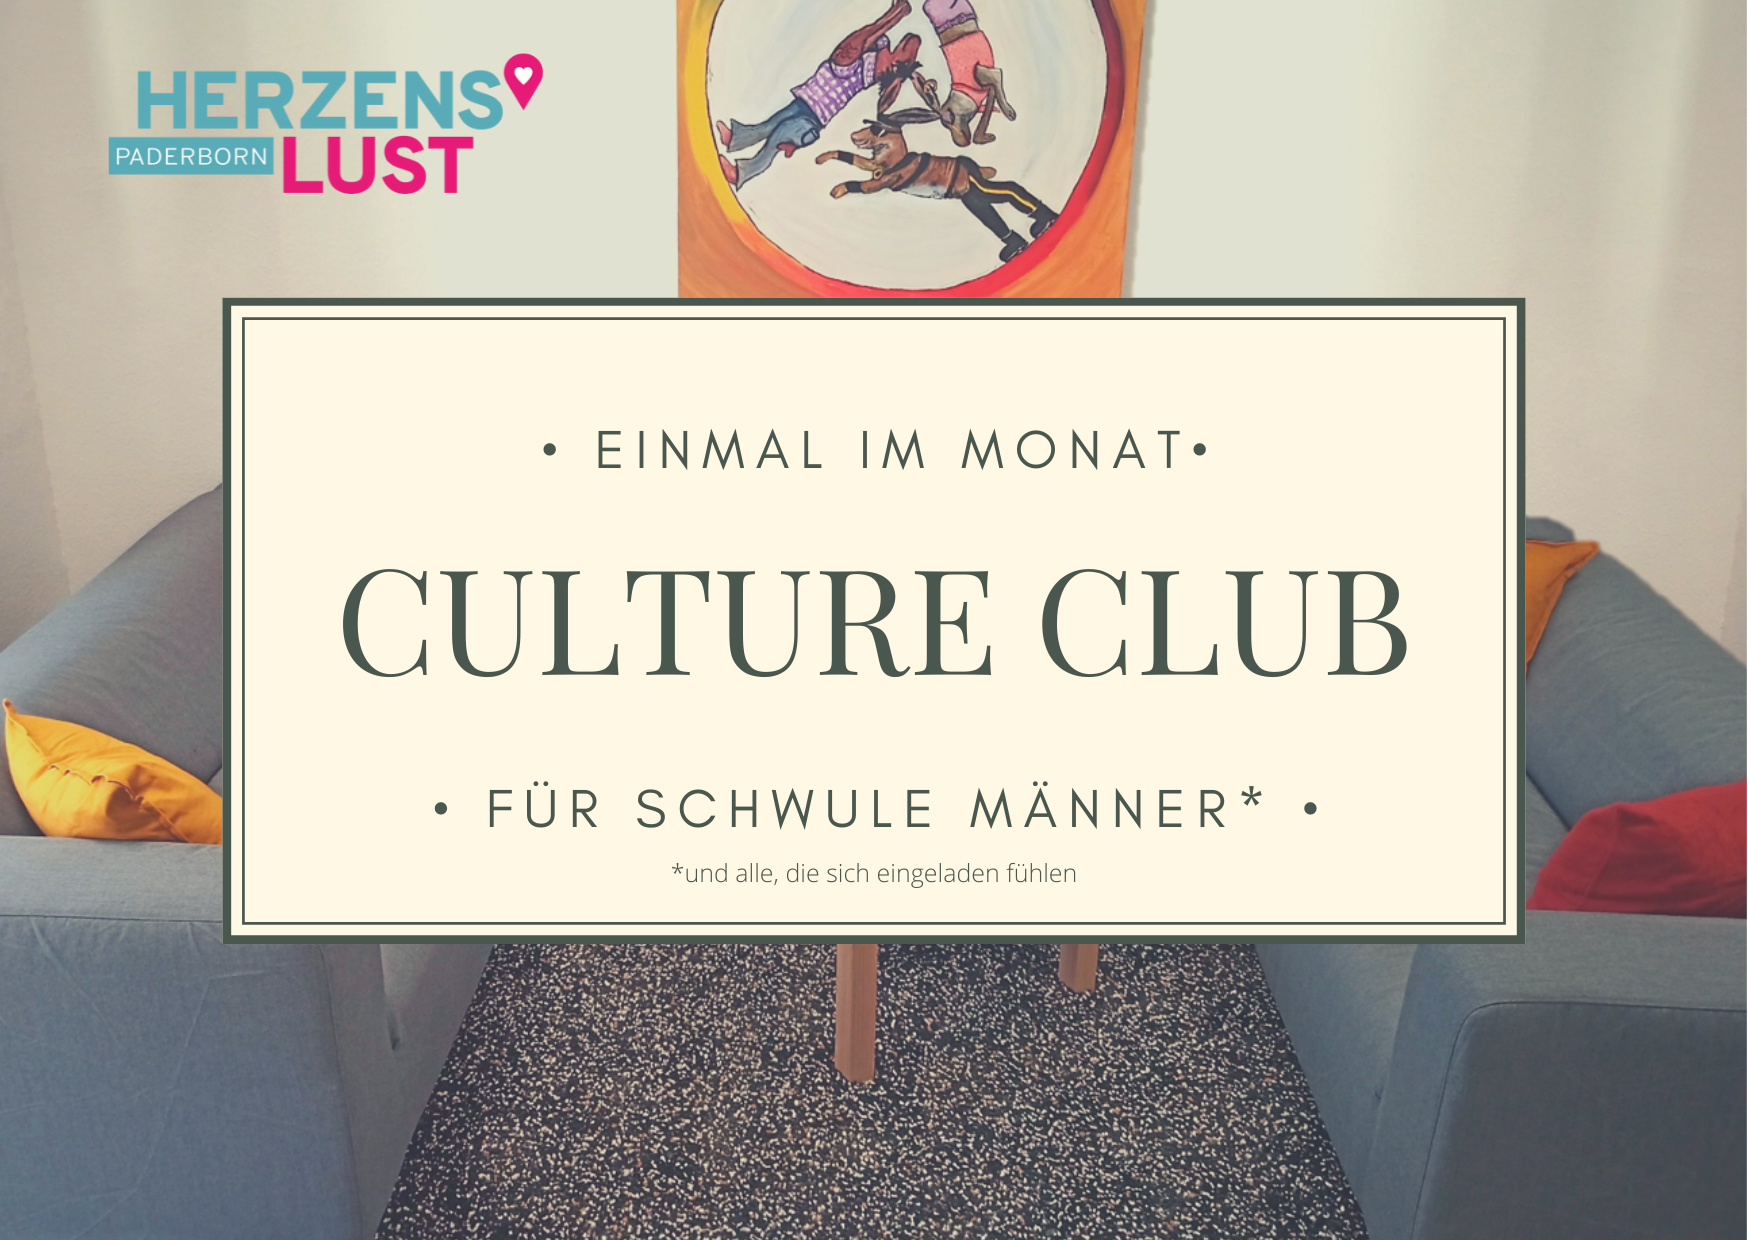 Culture Club einmal im Monat für schwule Männer